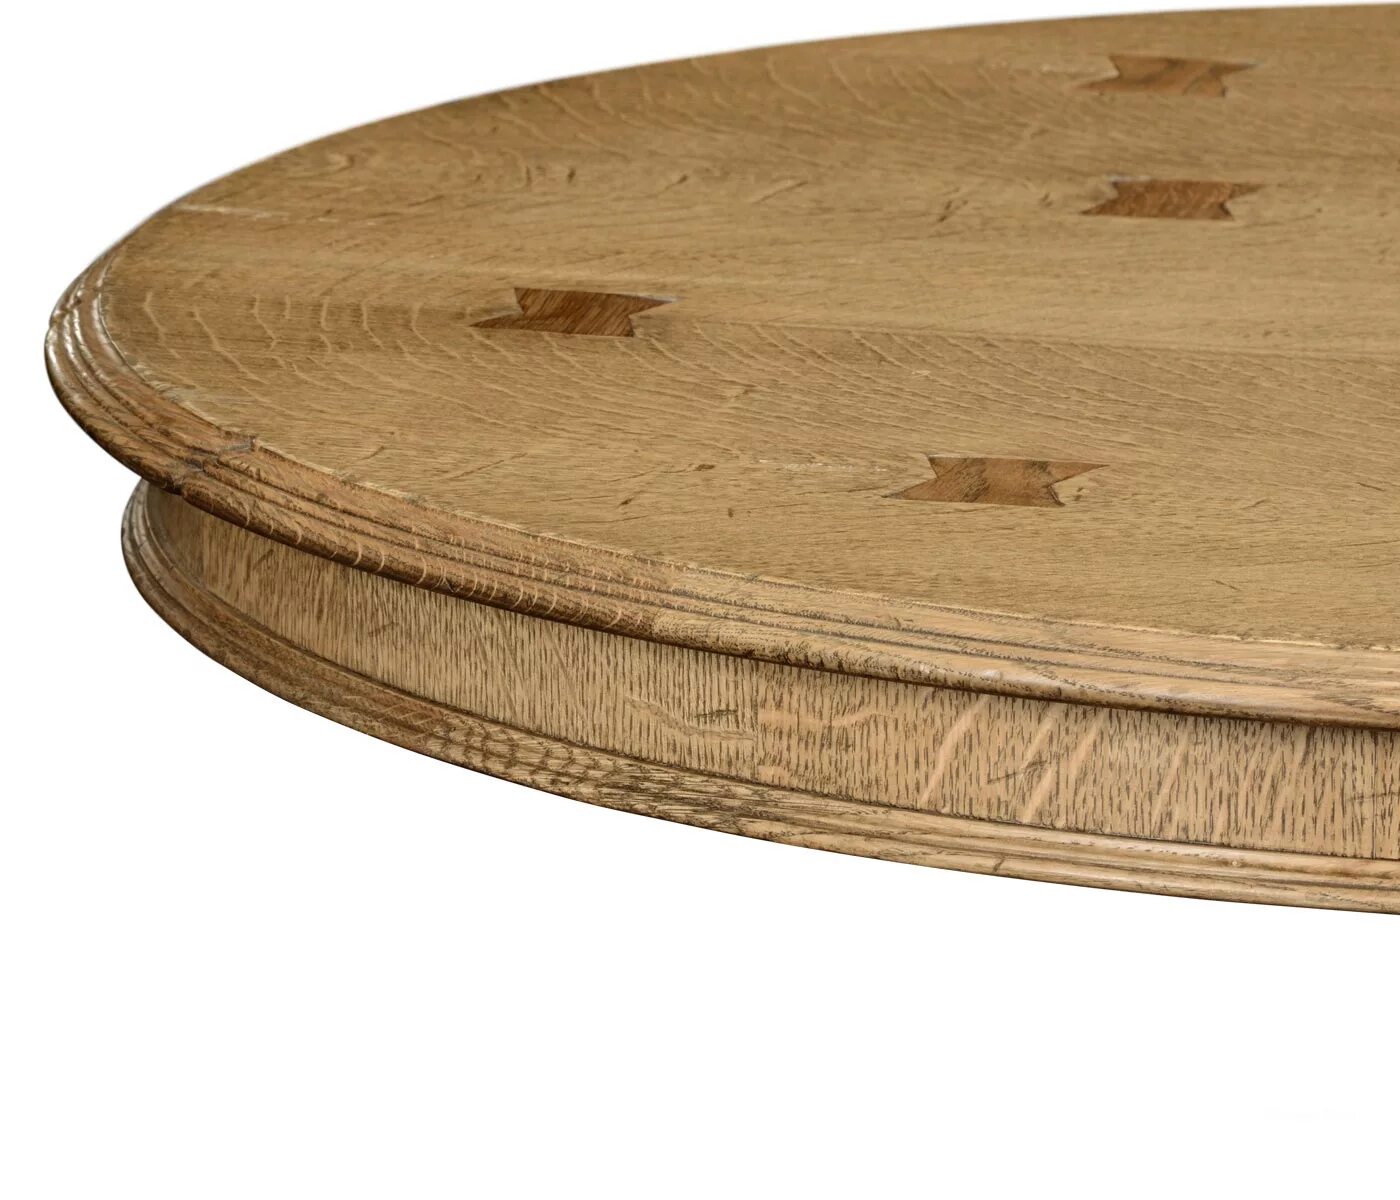 Kamp hpl18 столешница круглая. Столешница круглая деревянная. Круглая столешница для стола. Круглая столешница из дерева.